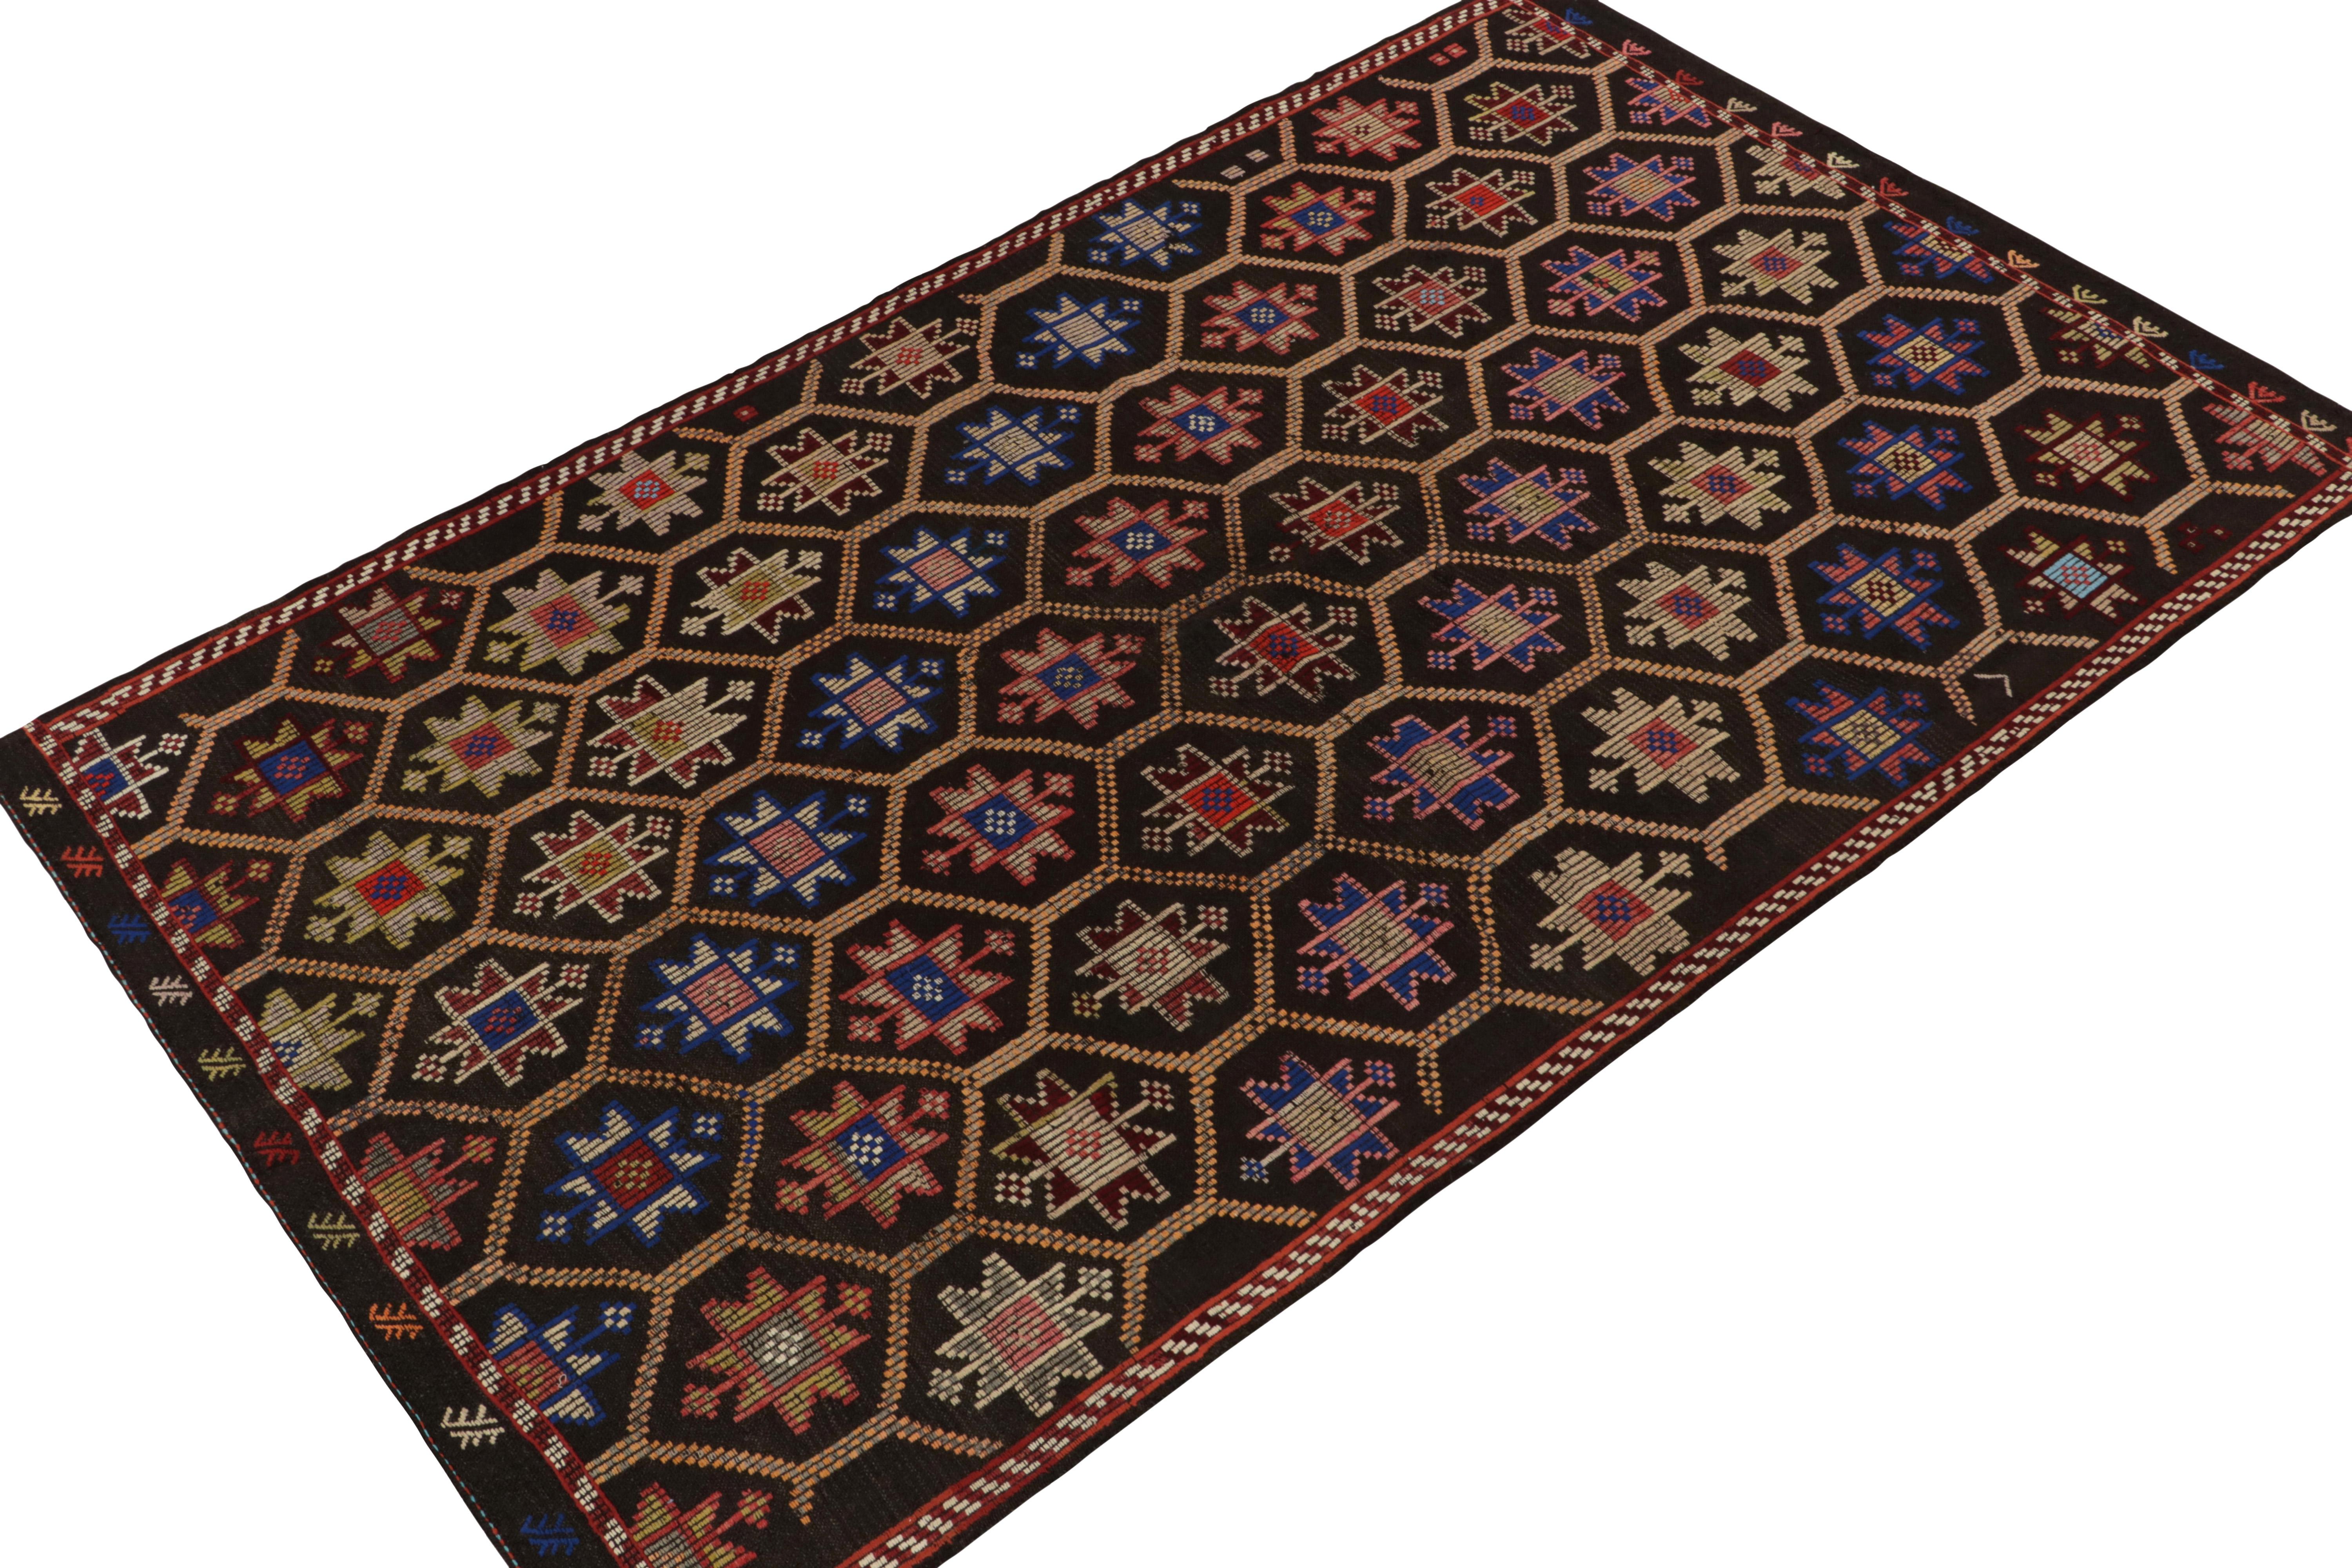 Turkish Vintage Cecim Kilim, Tribal Rug in Brown, Red and Blue Patterns by Rug & Kilim For Sale